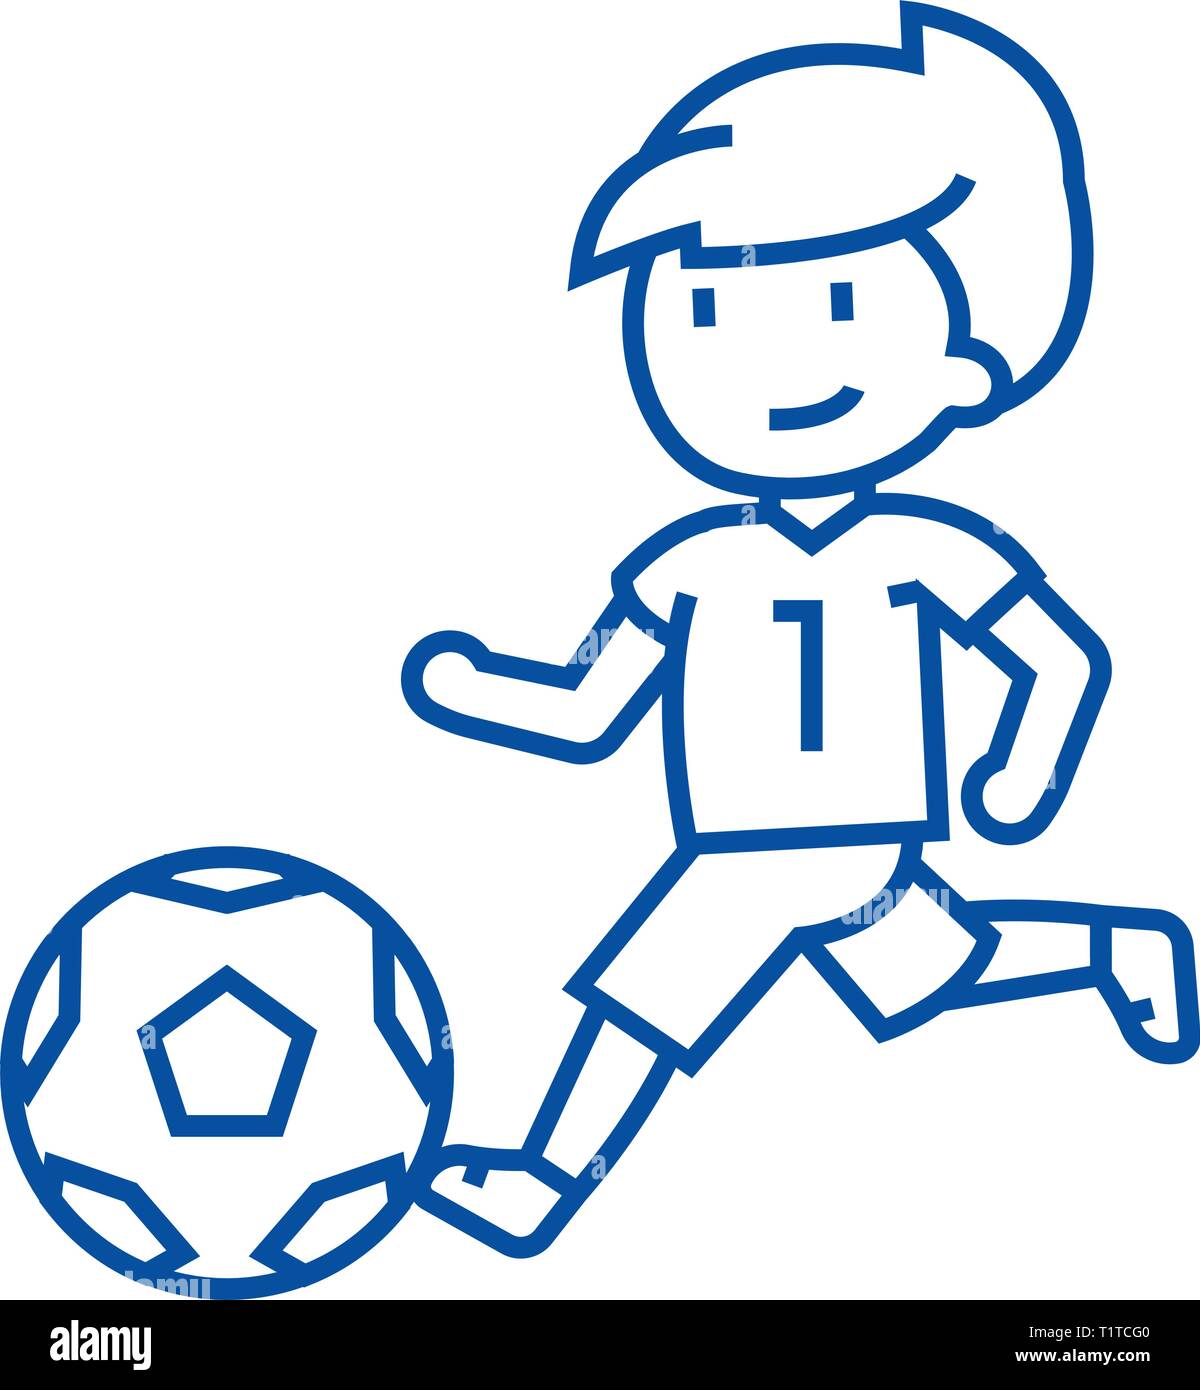 boy kicking ball clipart blue